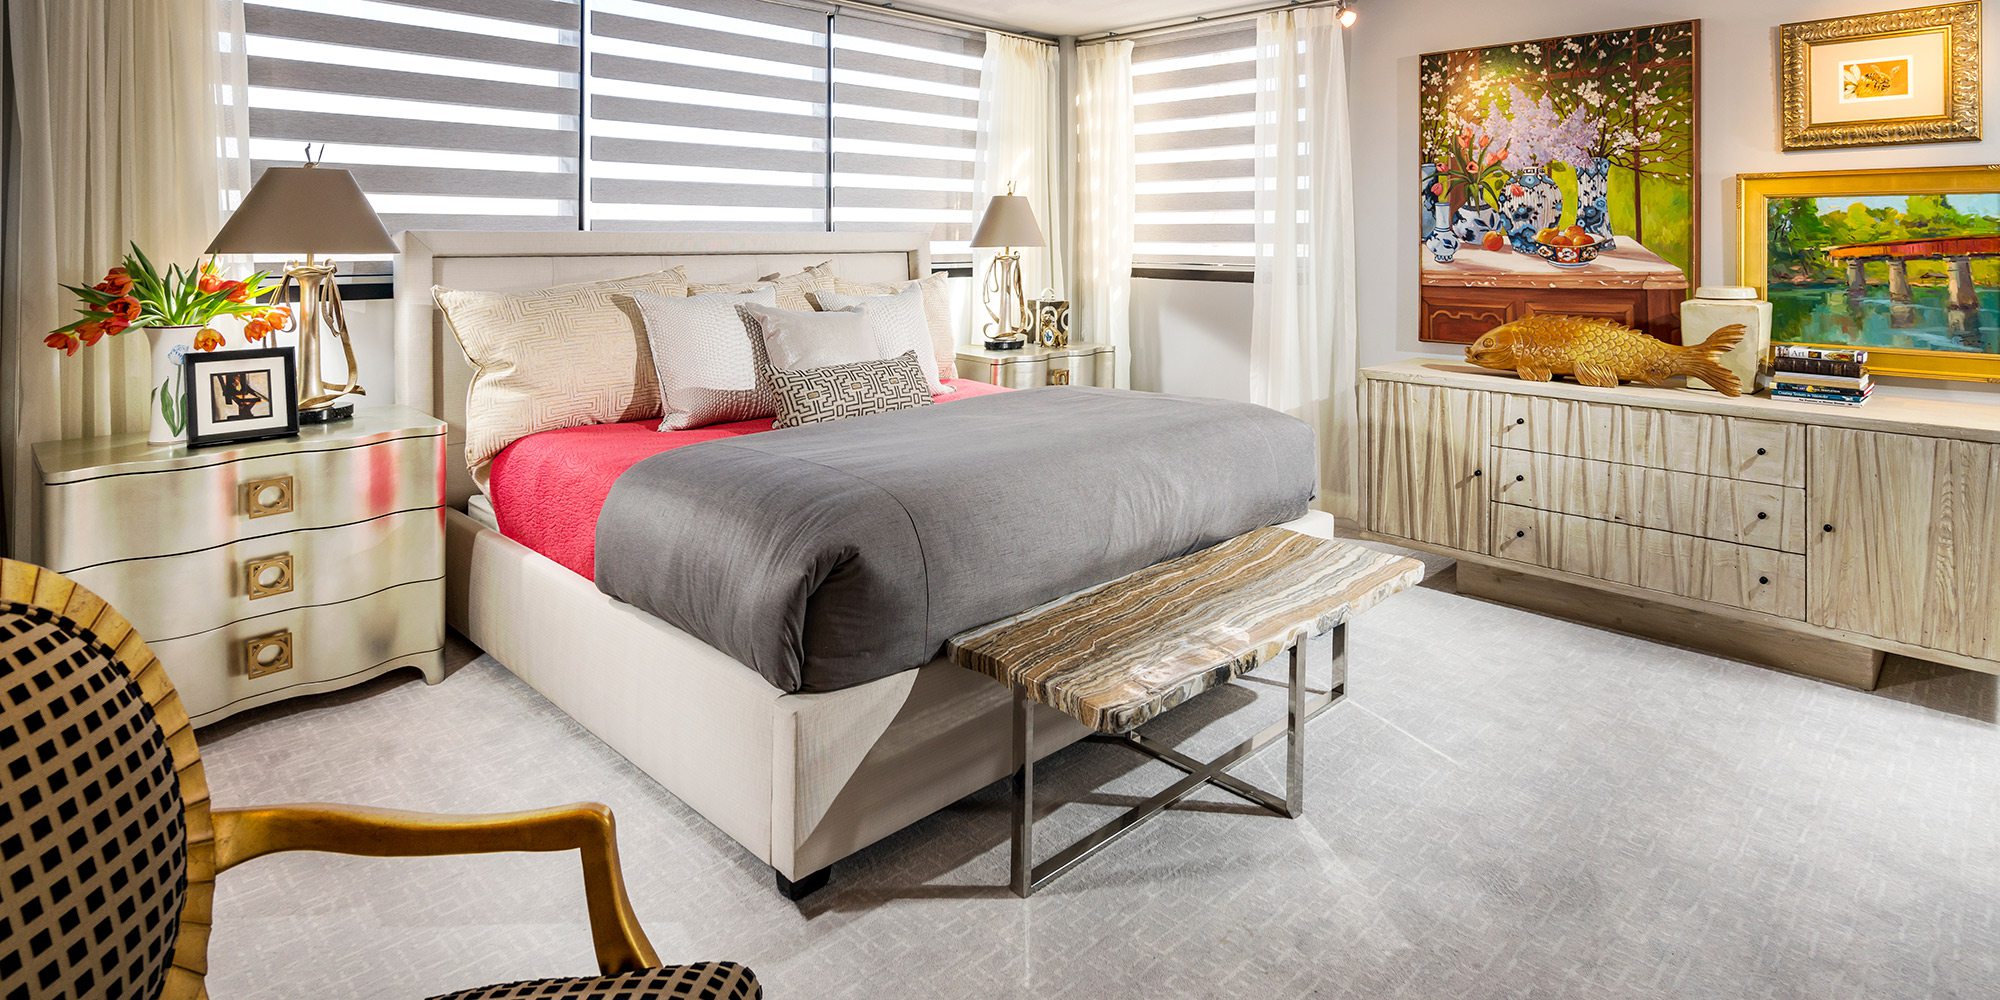 417 Home Design Awards 2019 Winner of Best Bedroom Design by Obelisk Home Springfield MO